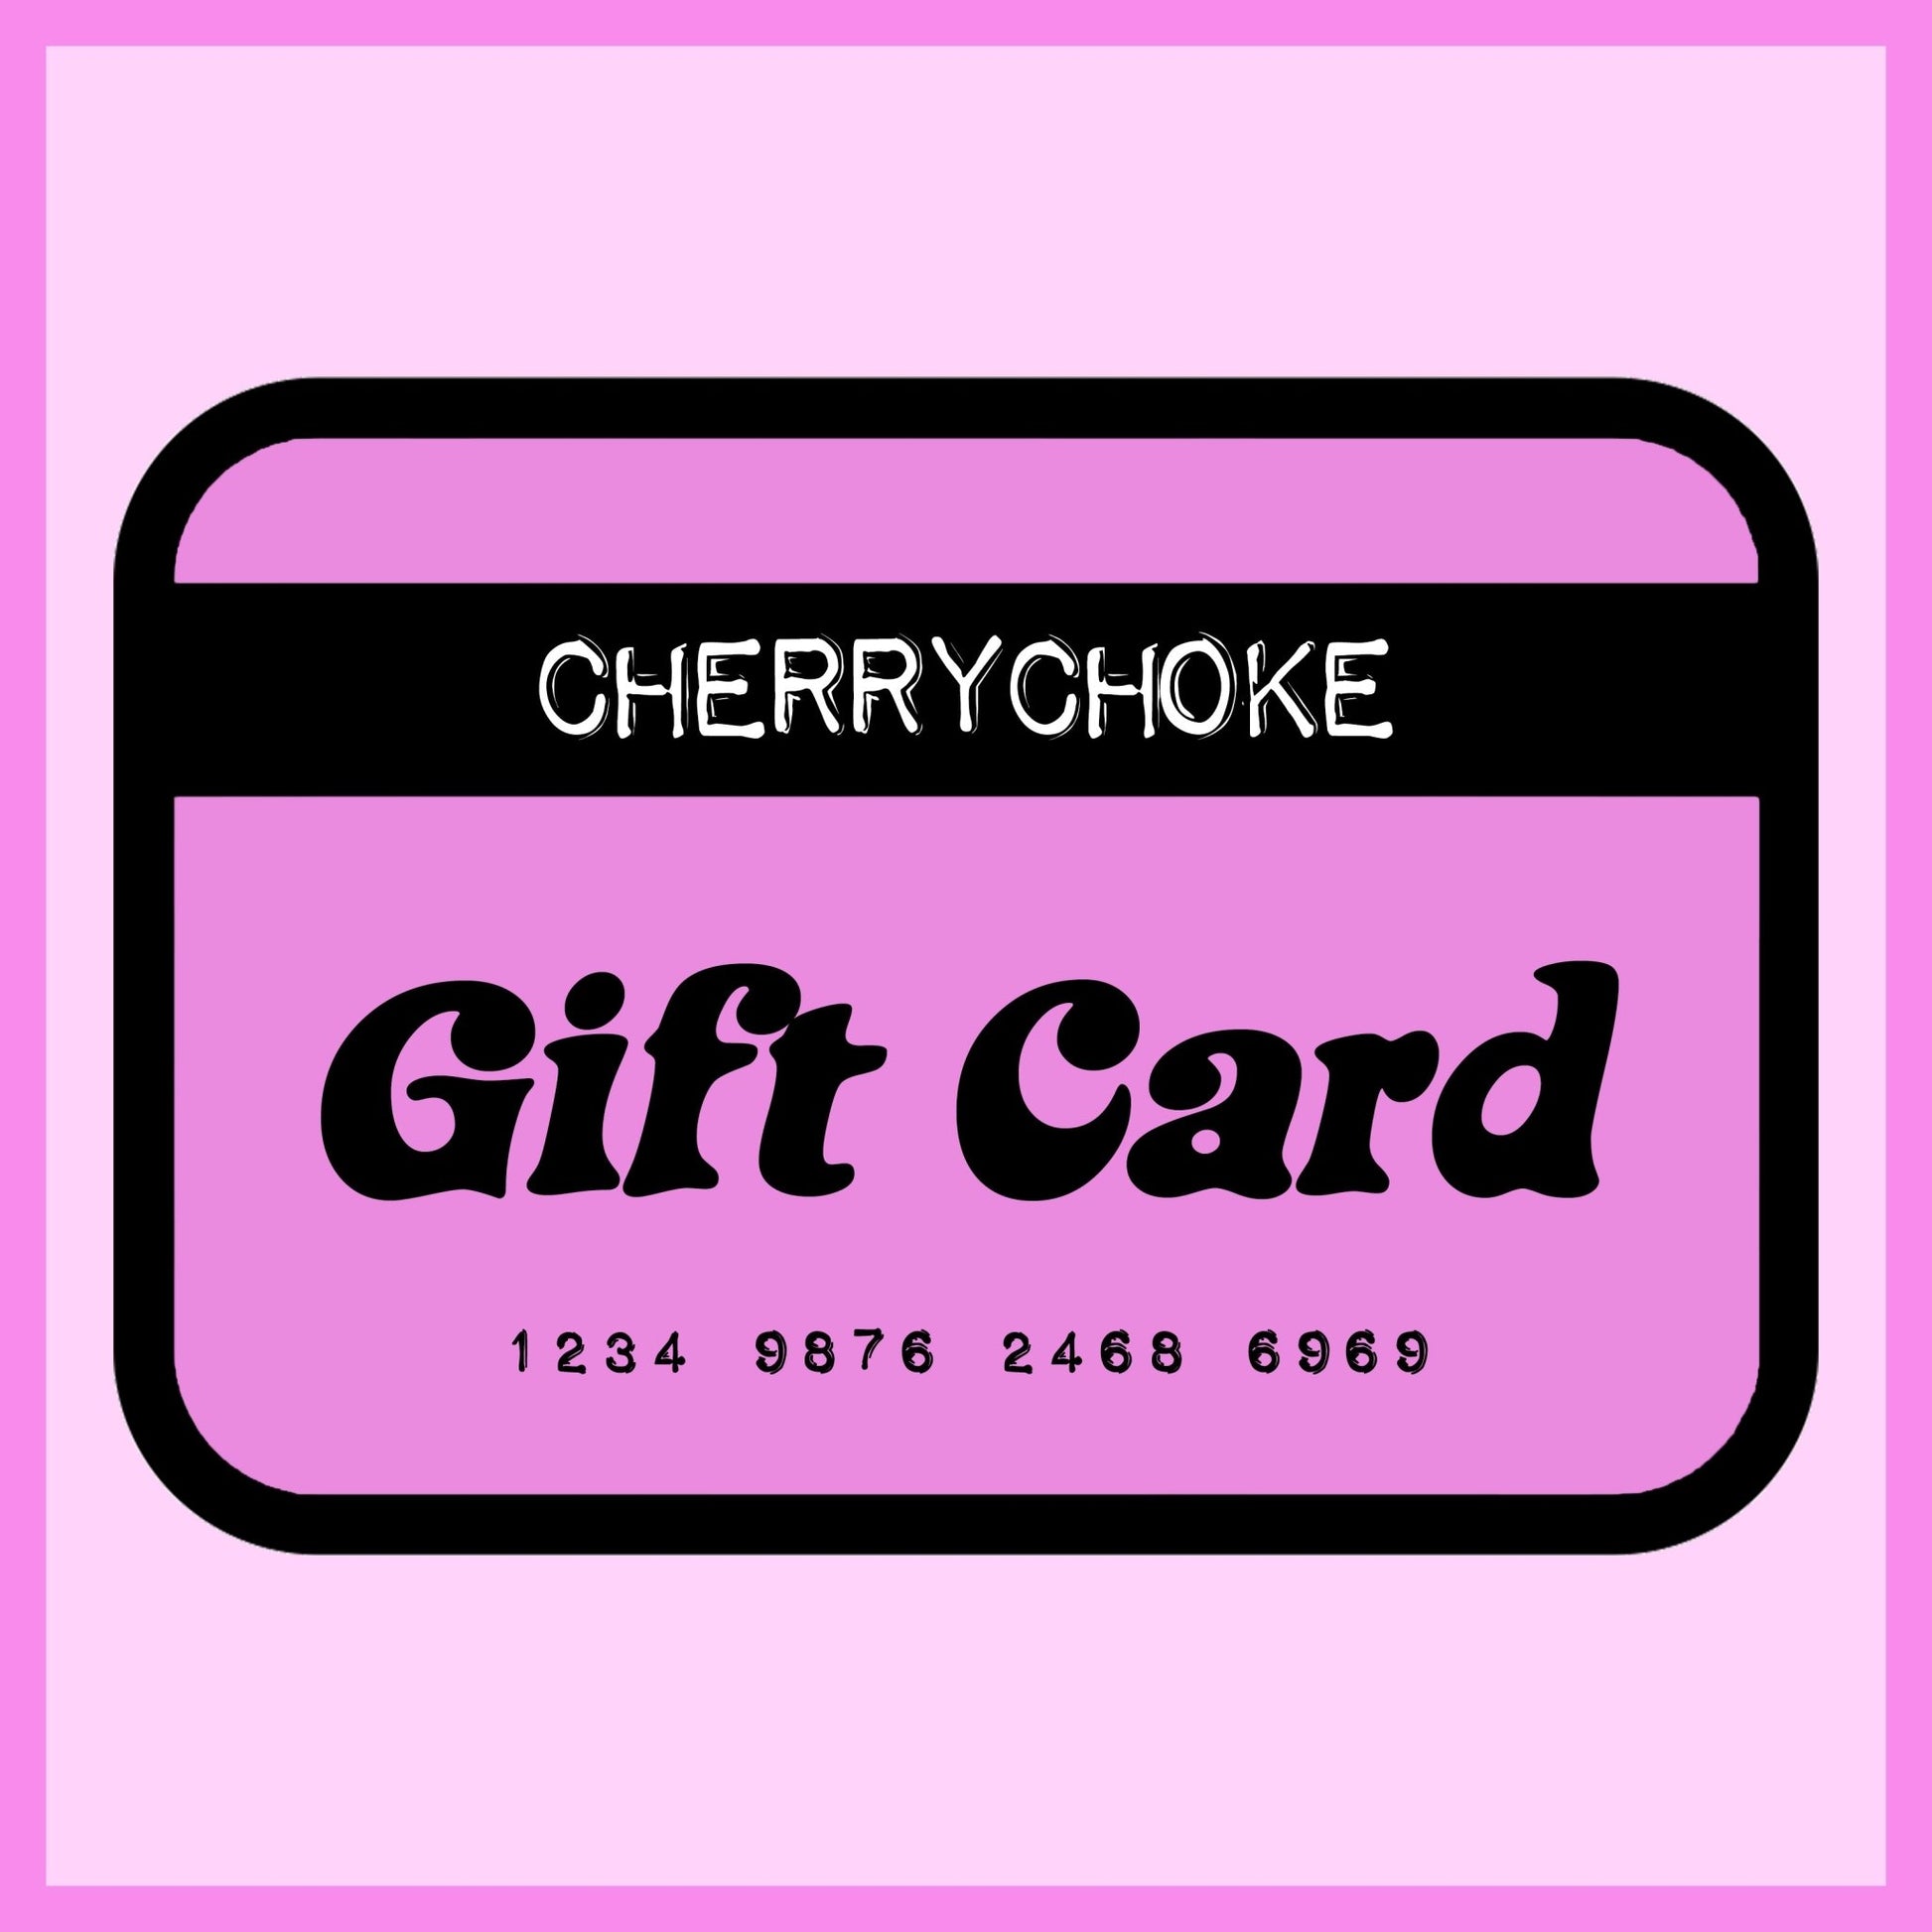 Gift Card - CHERRYCHOKE